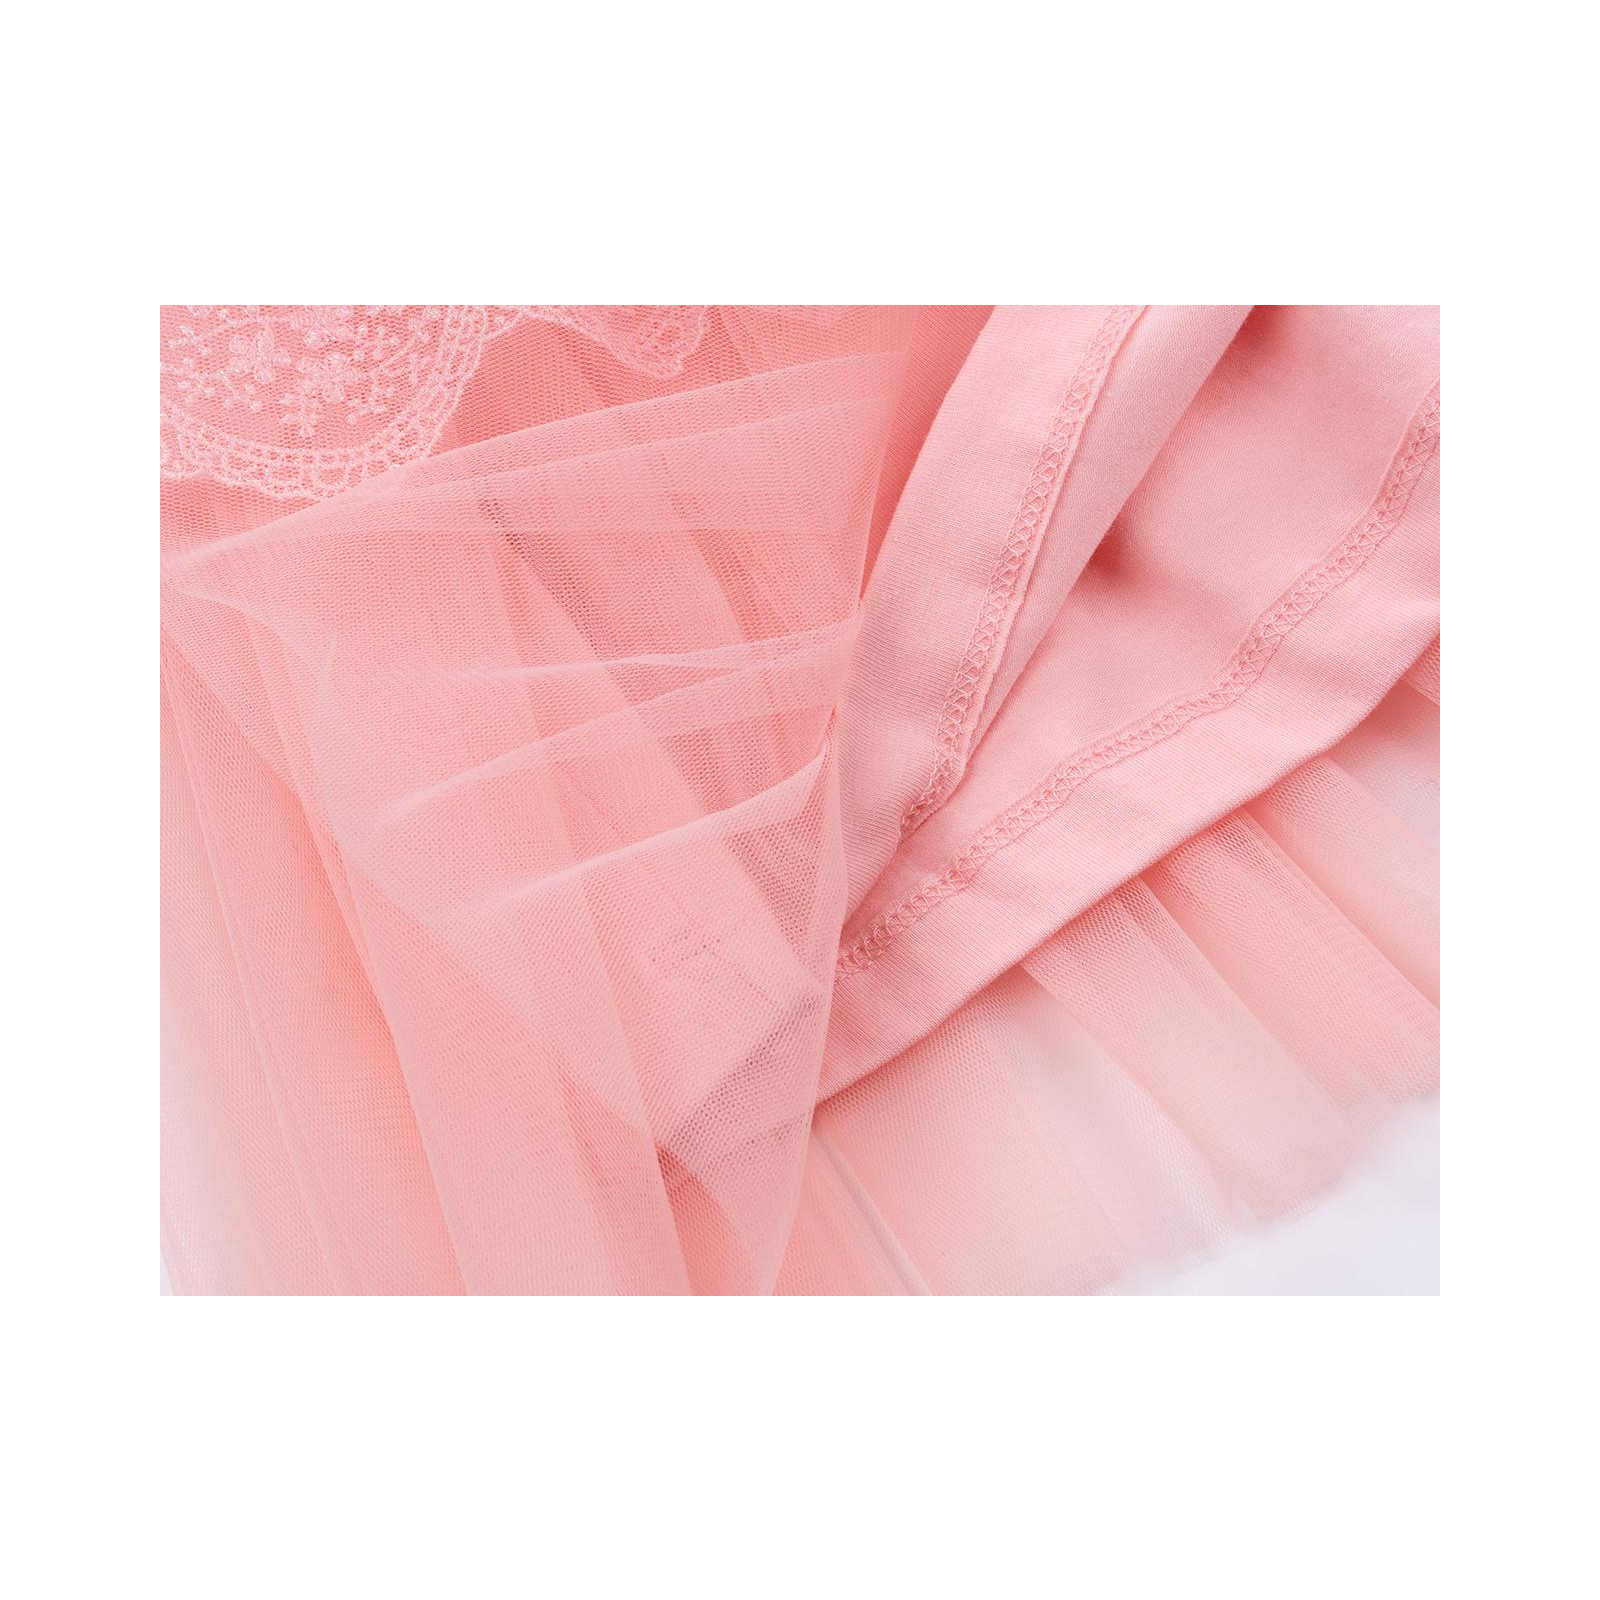 Плаття Breeze кружевное с оборками (9011-104G-peach) зображення 5